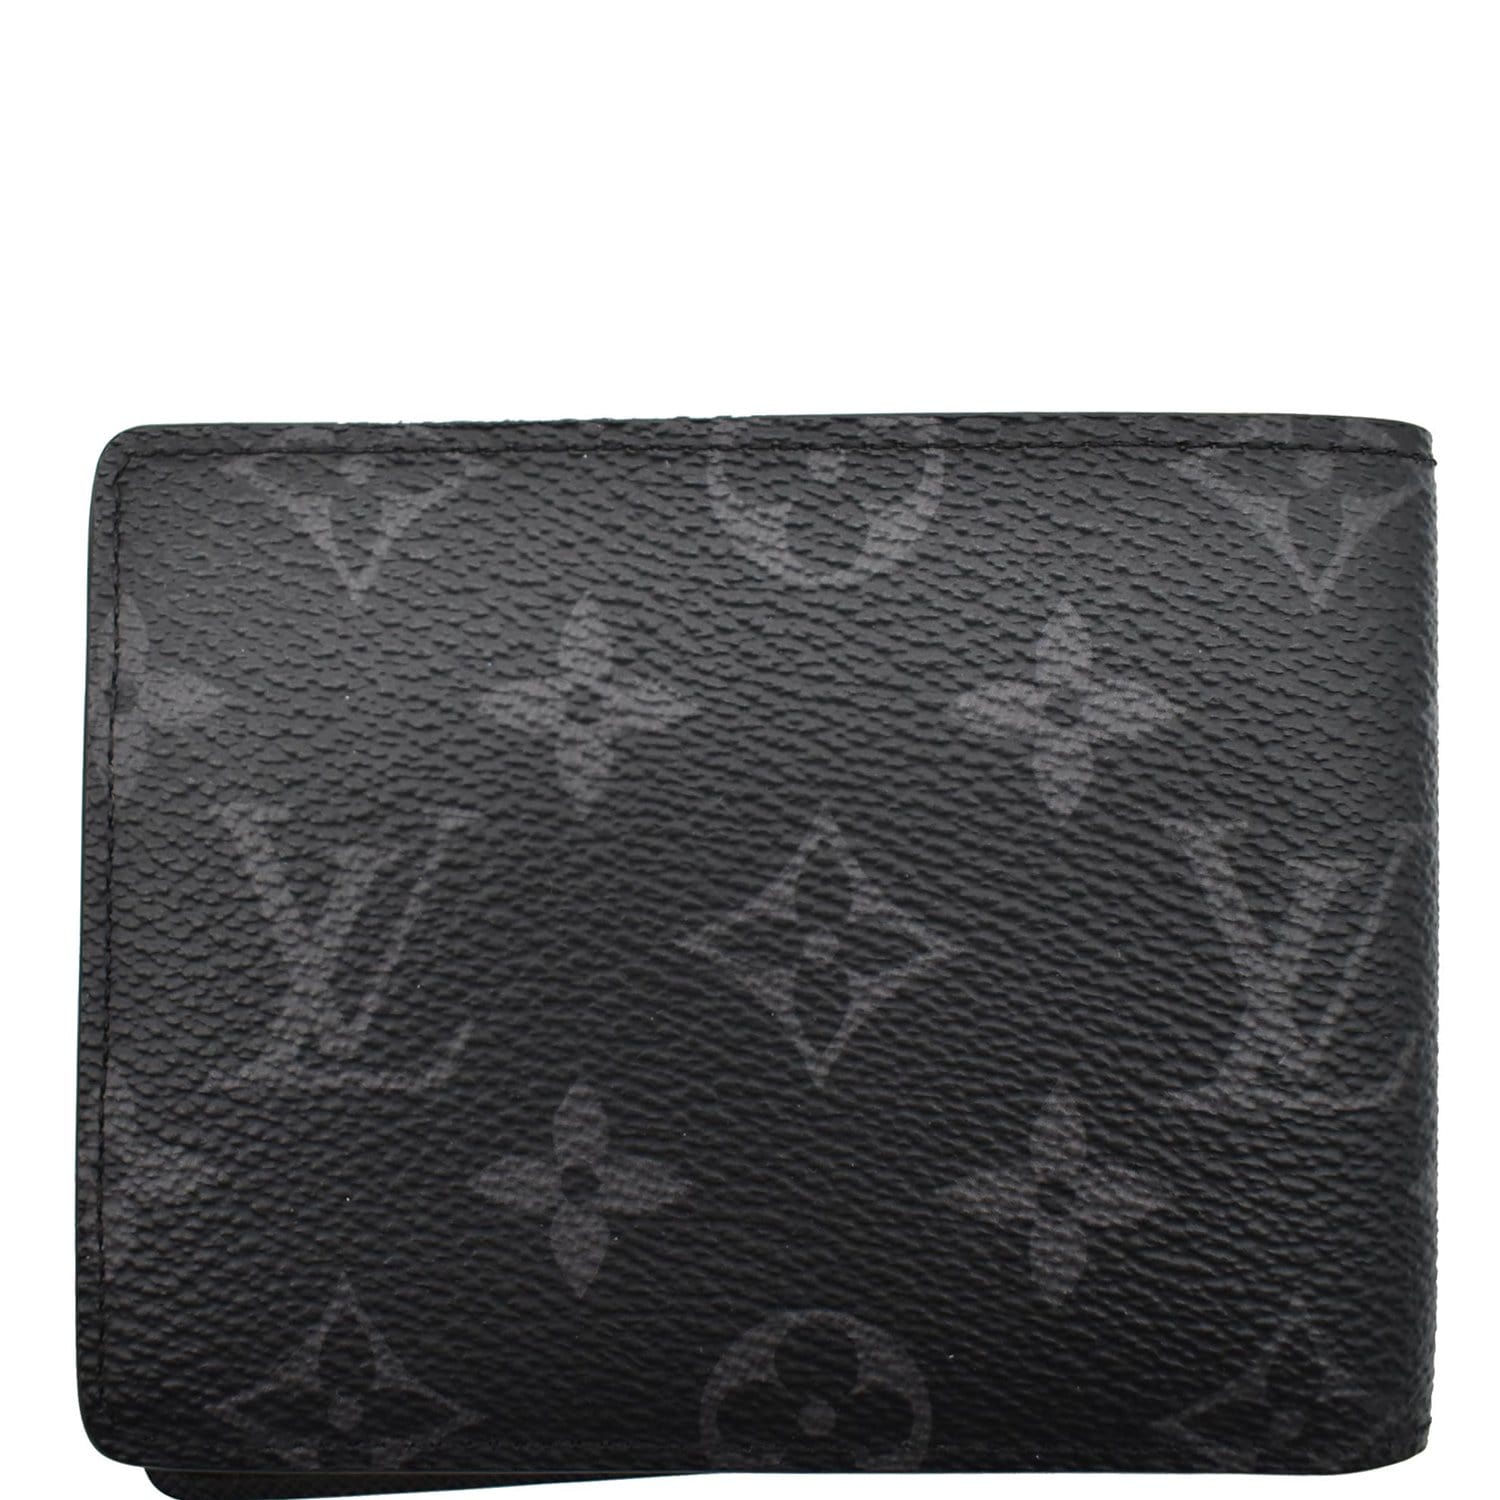 black and grey lv wallet